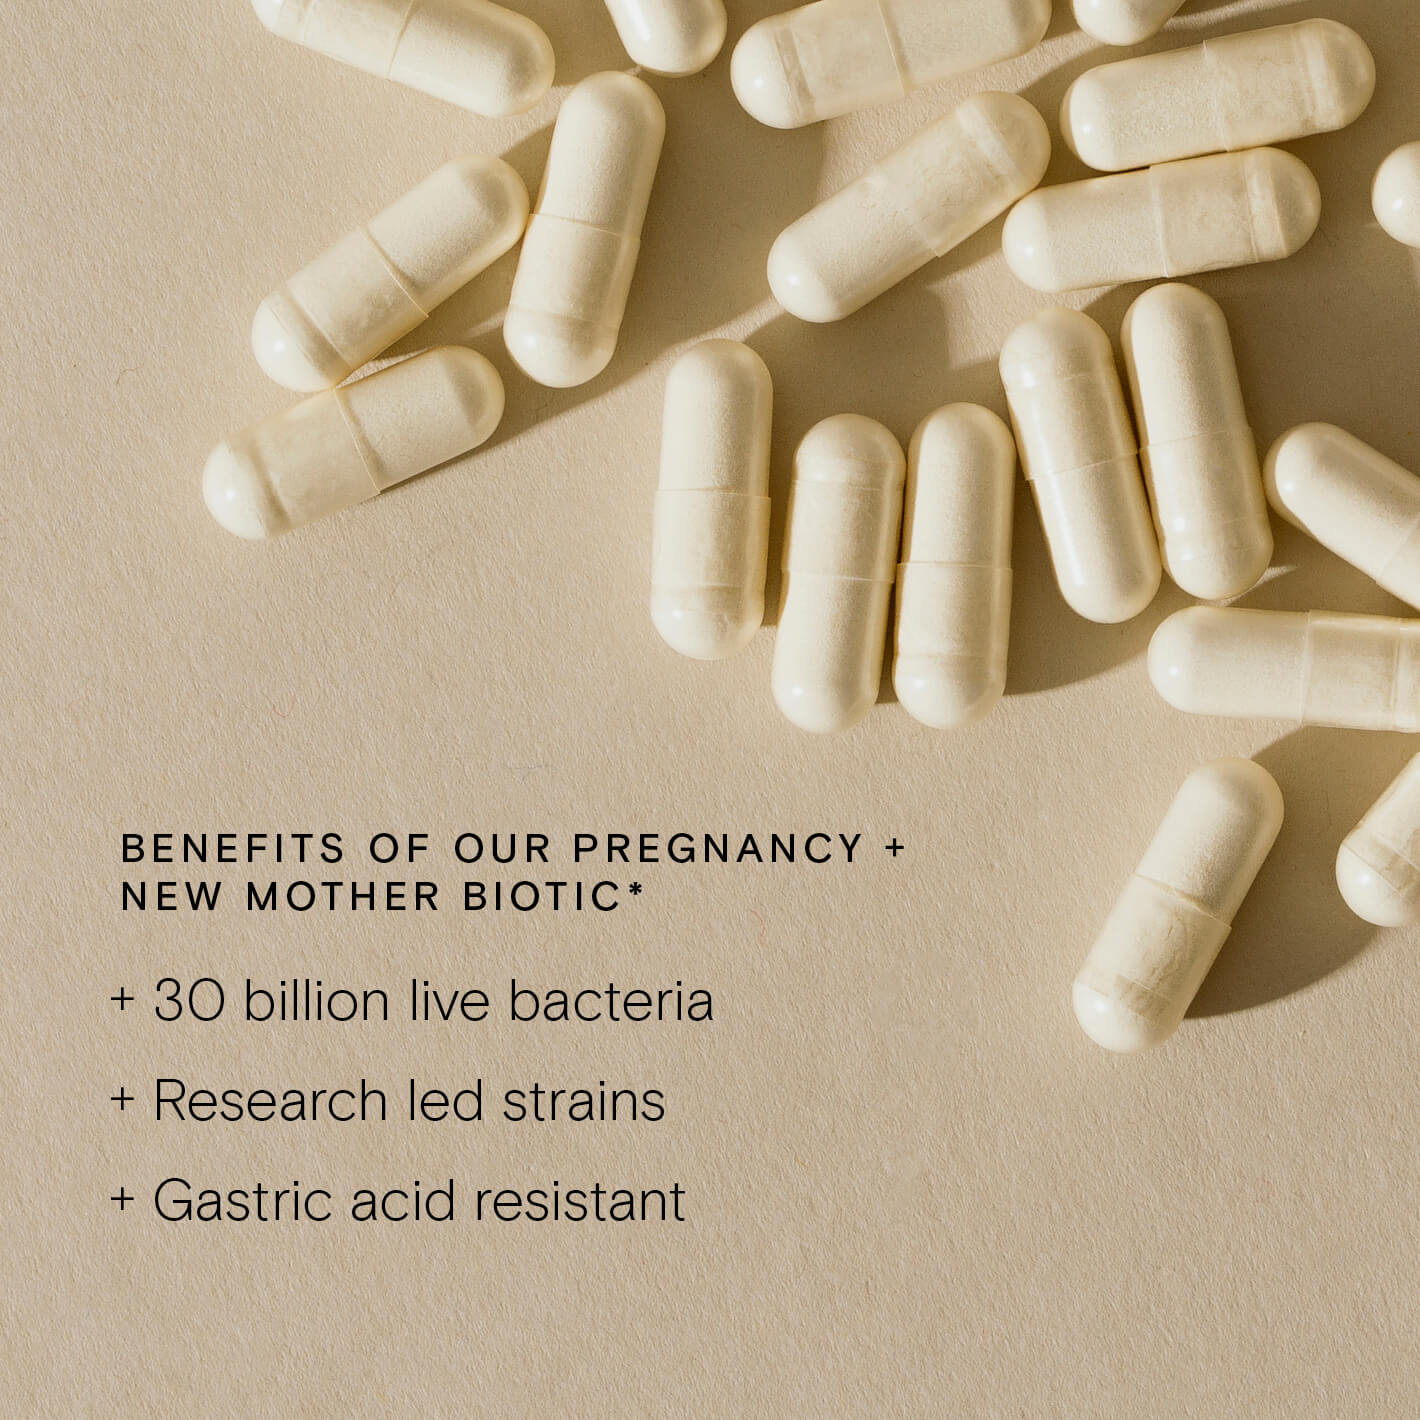 Pregnancy + New Mother Biotic